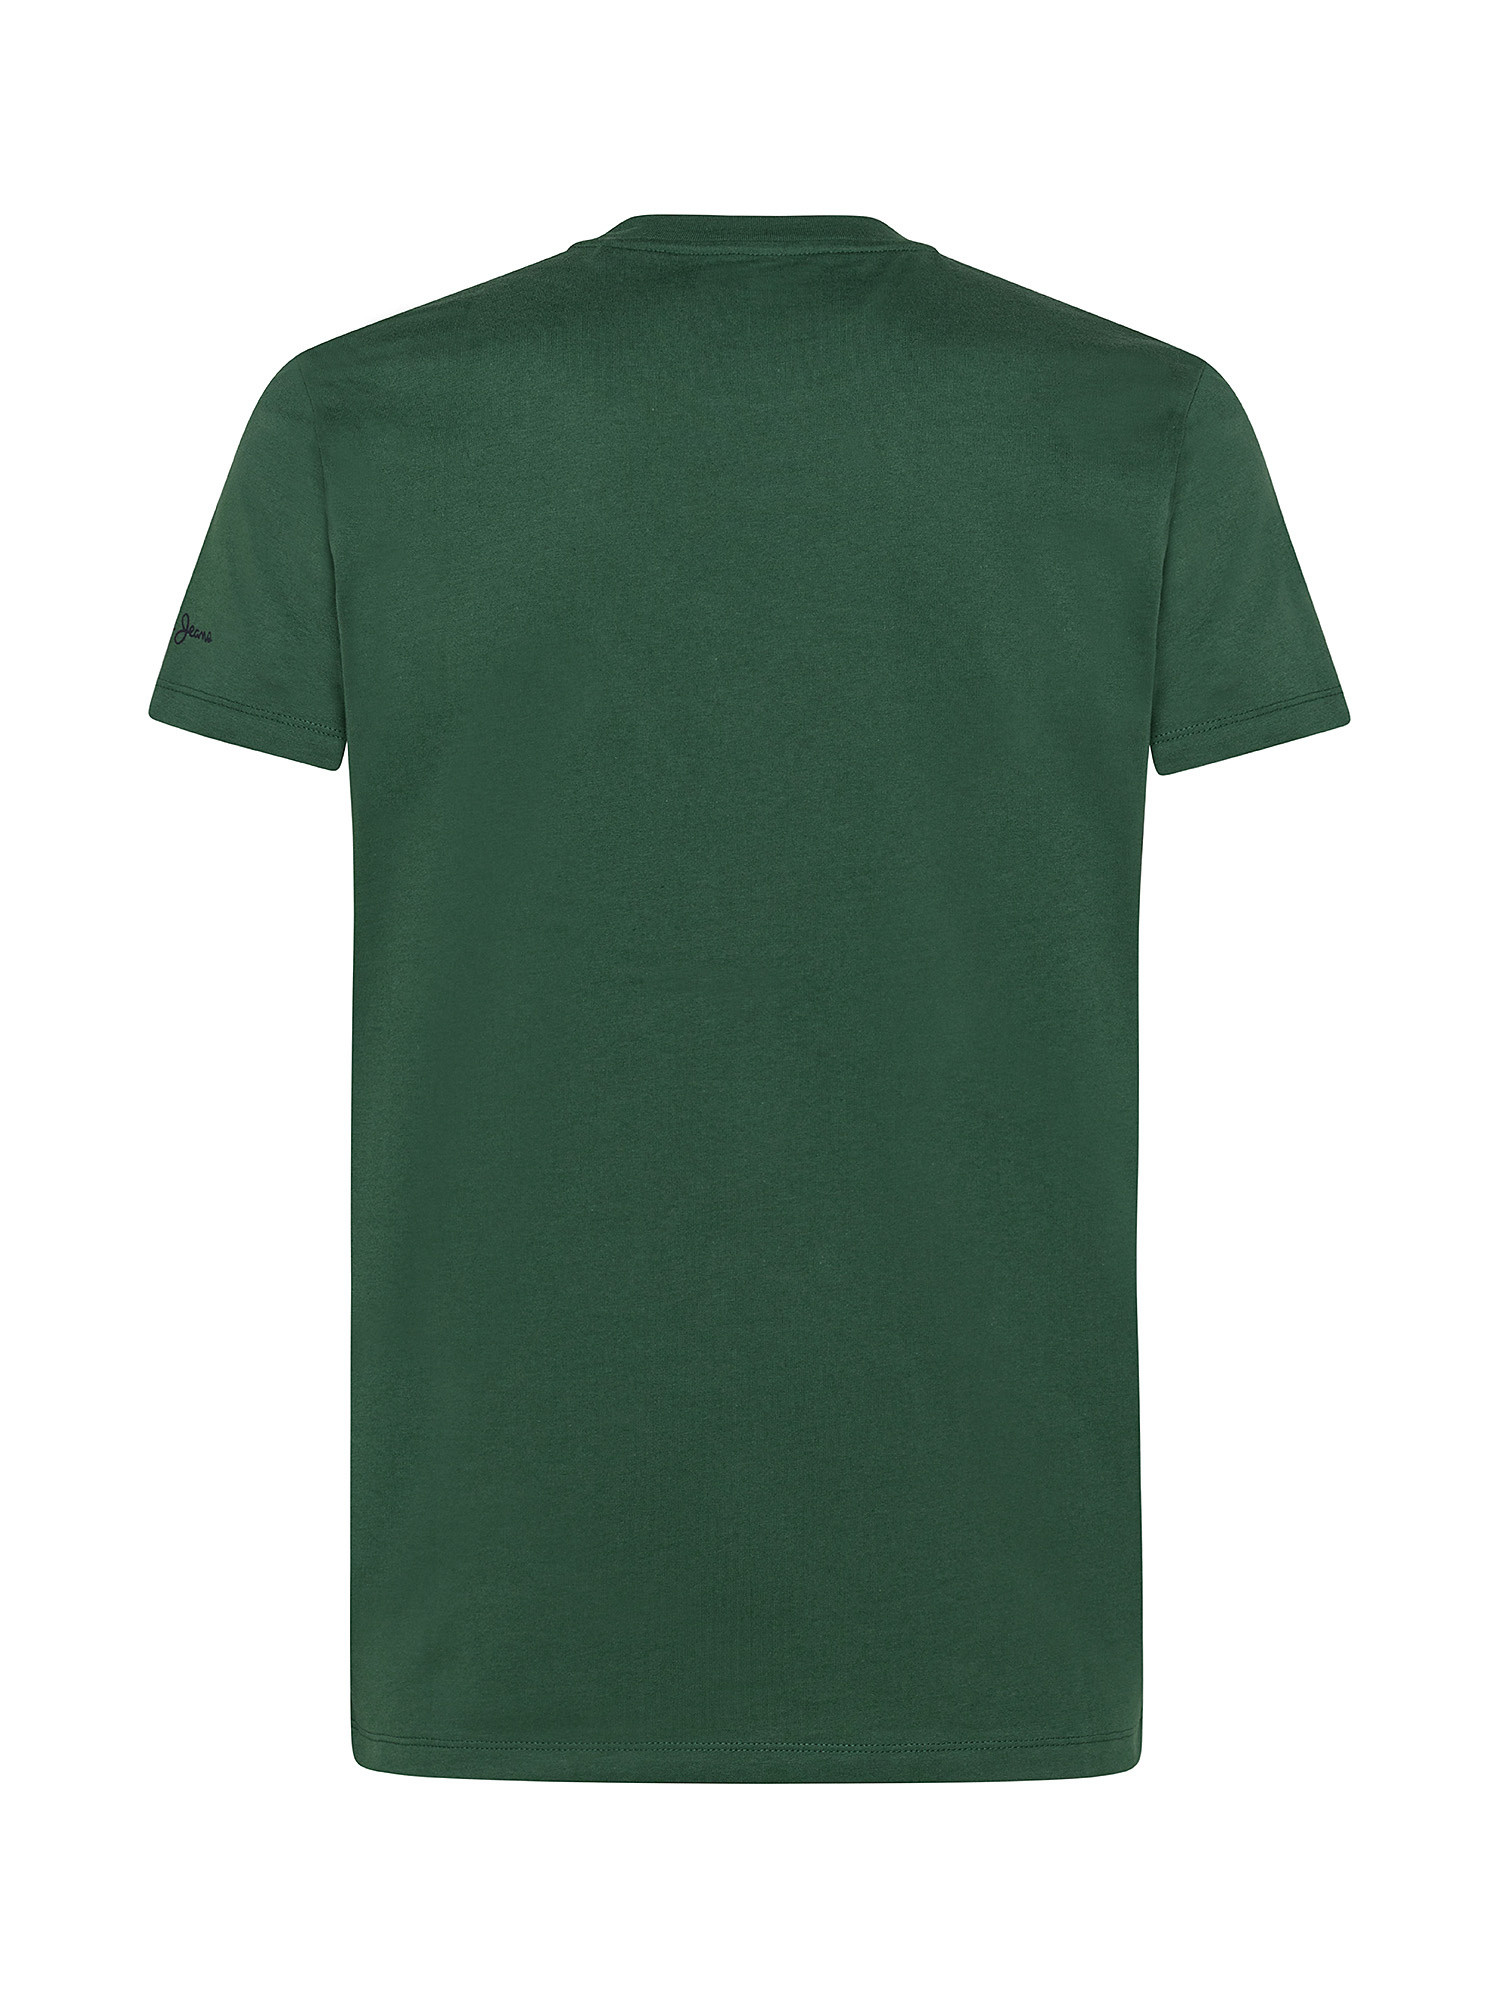 Totem cotton T-shirt, Green, large image number 1